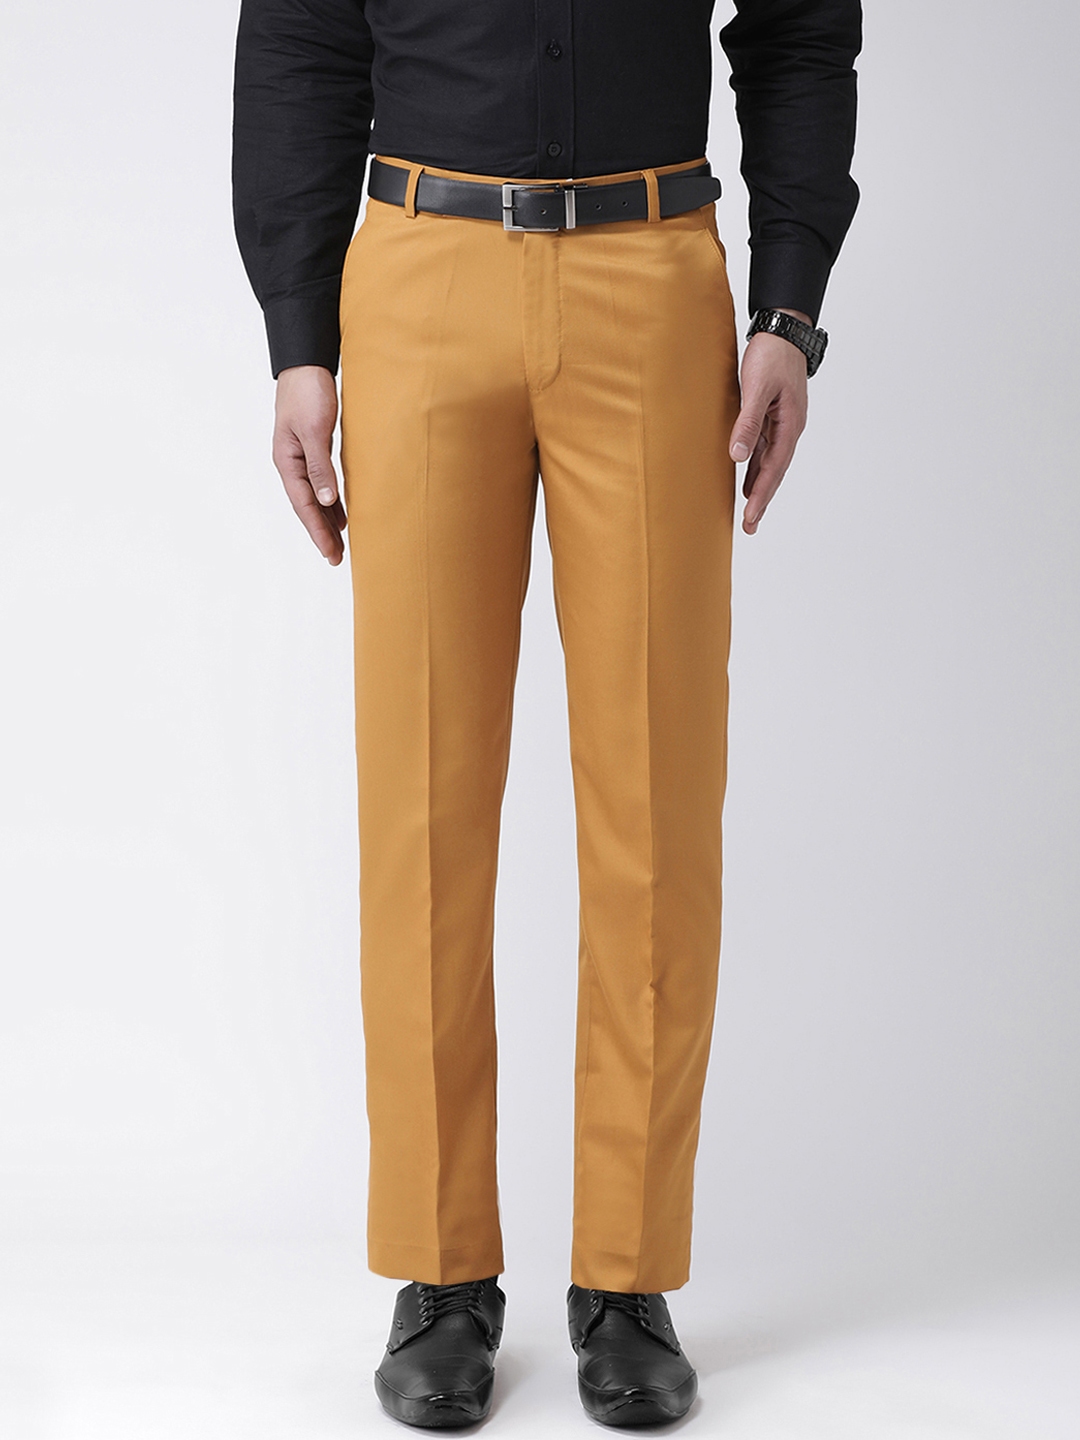 Buy Mustard Brown Trousers  Pants for Men by Hubberholme Online  Ajiocom